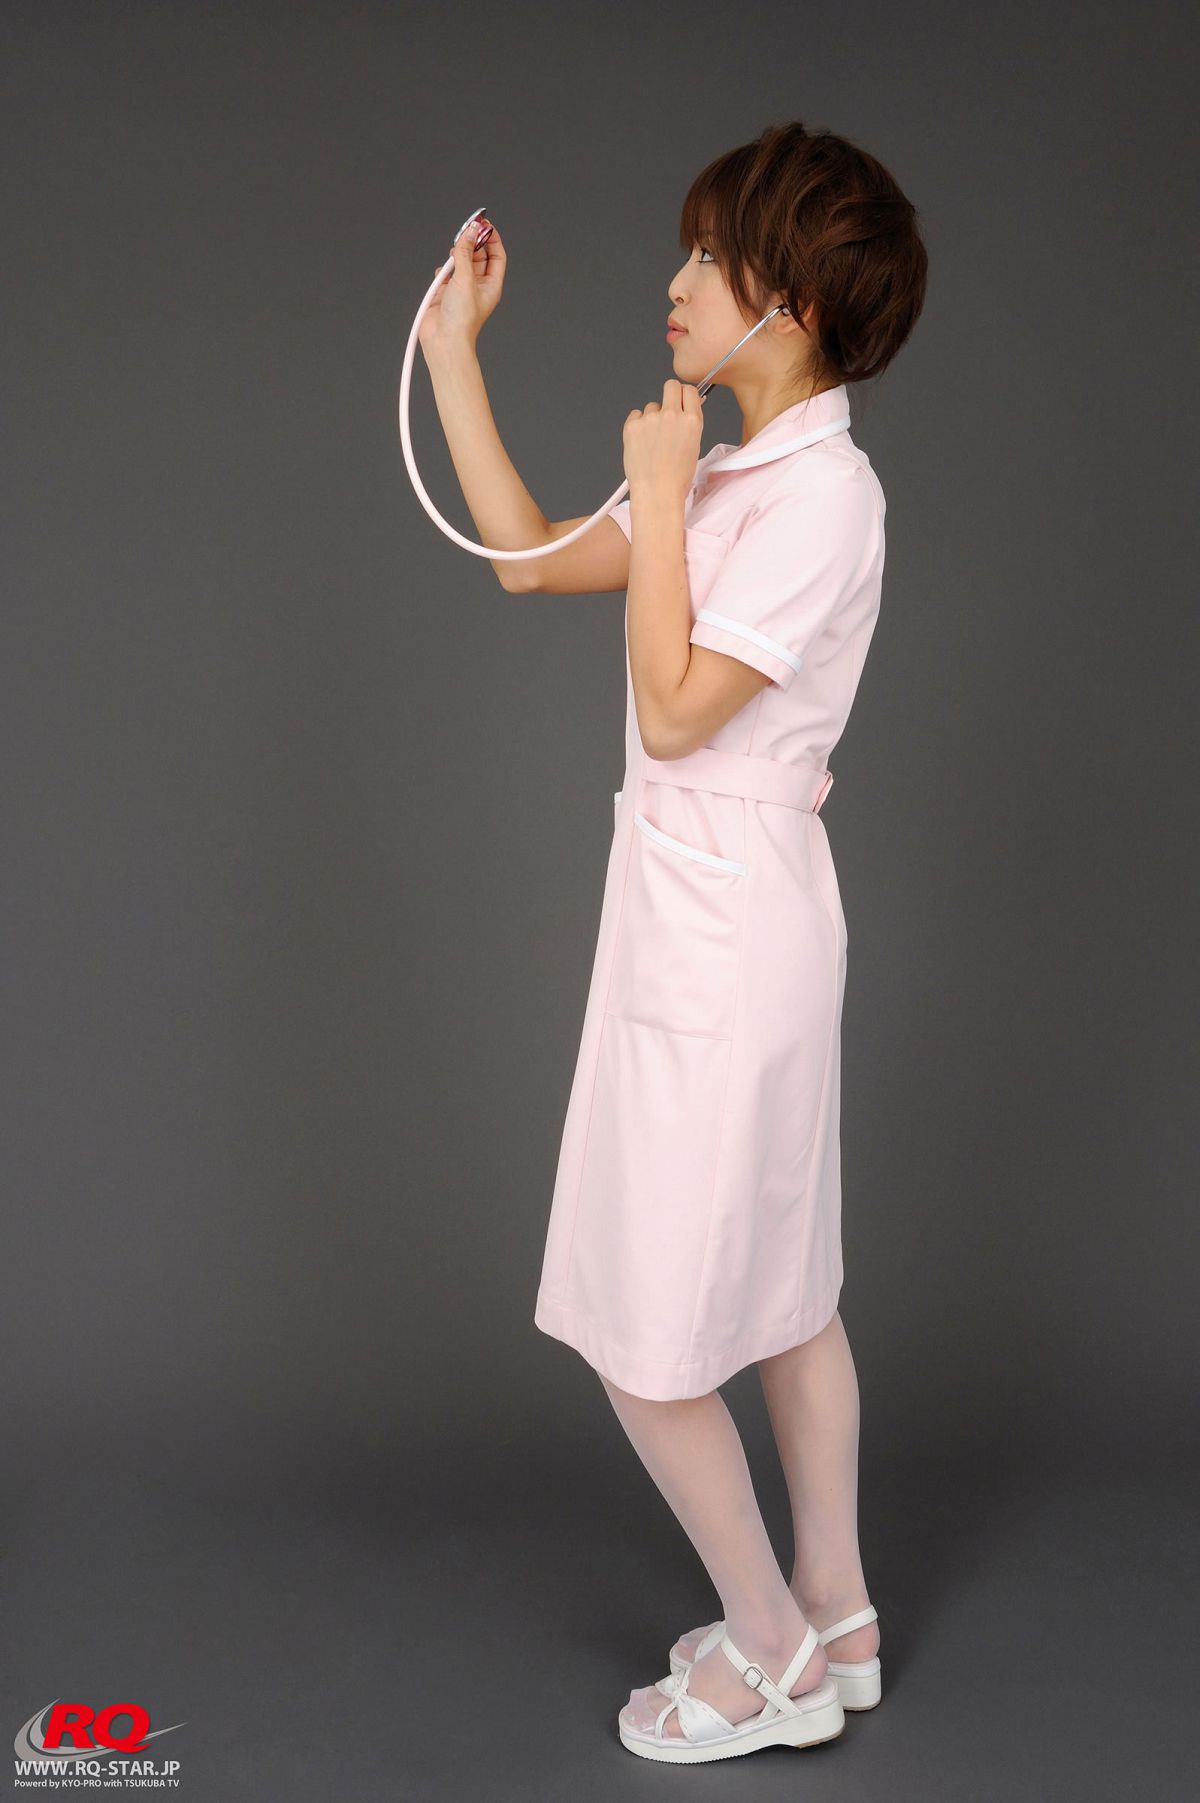 [RQ-Star] No.0019 Umi Kurihara 栗原海 ピンクナース 护士装  Nurse Costume [73P]